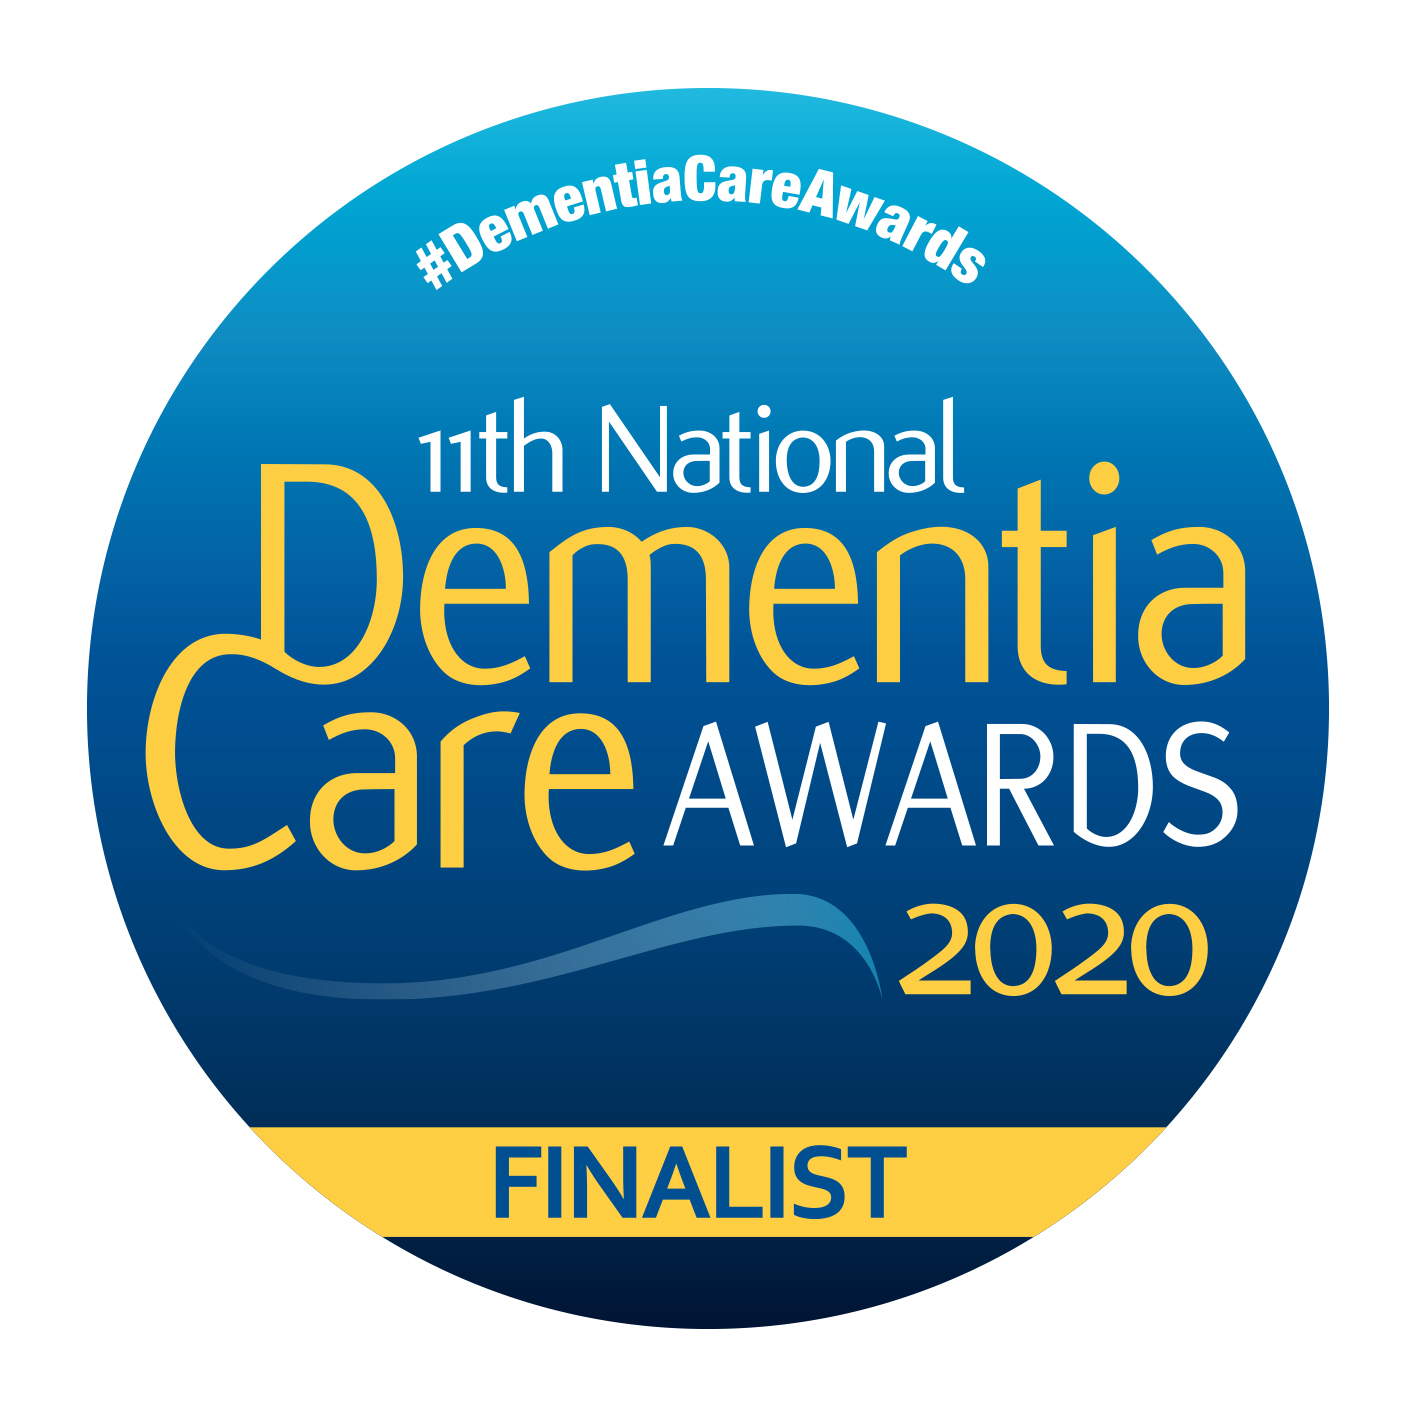 Dementia_Care_Awards_2020_logo_finalist.jpg - 592.49 kB